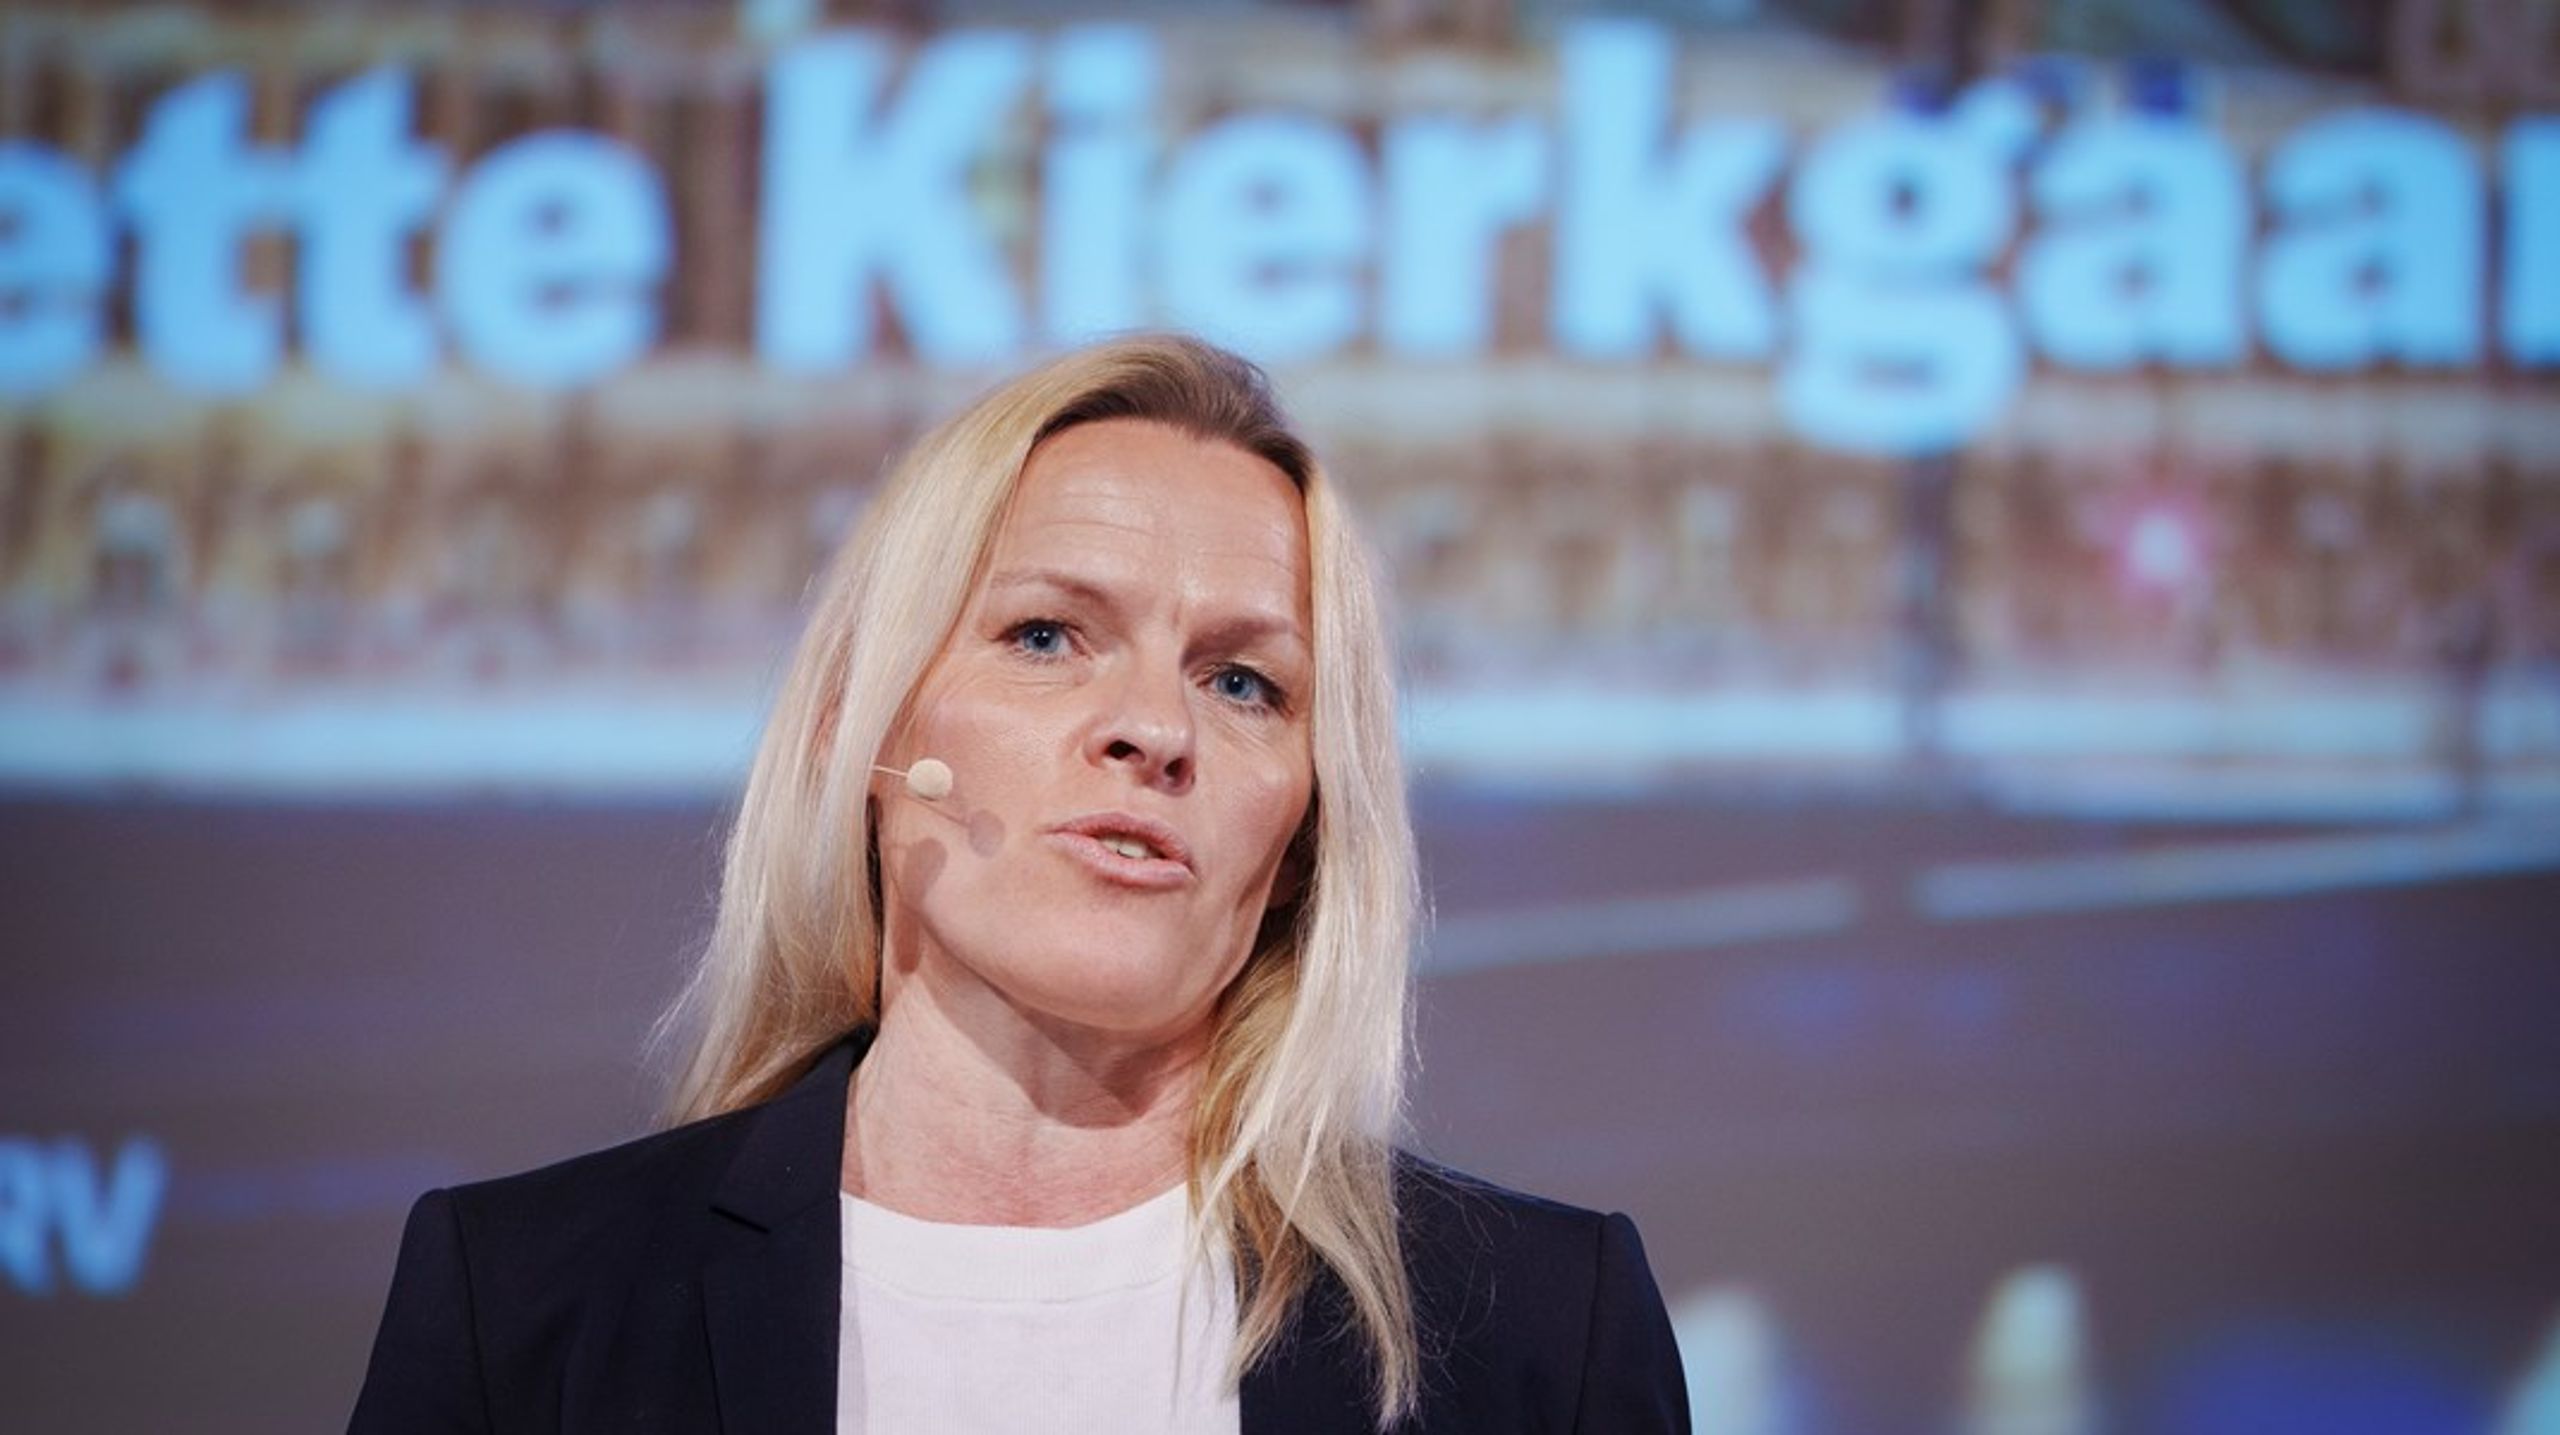 Ældreminister&nbsp;Mette Kierkgaard har fået ny kommunikationschef, efter pladsen har stået tom i to måneder.